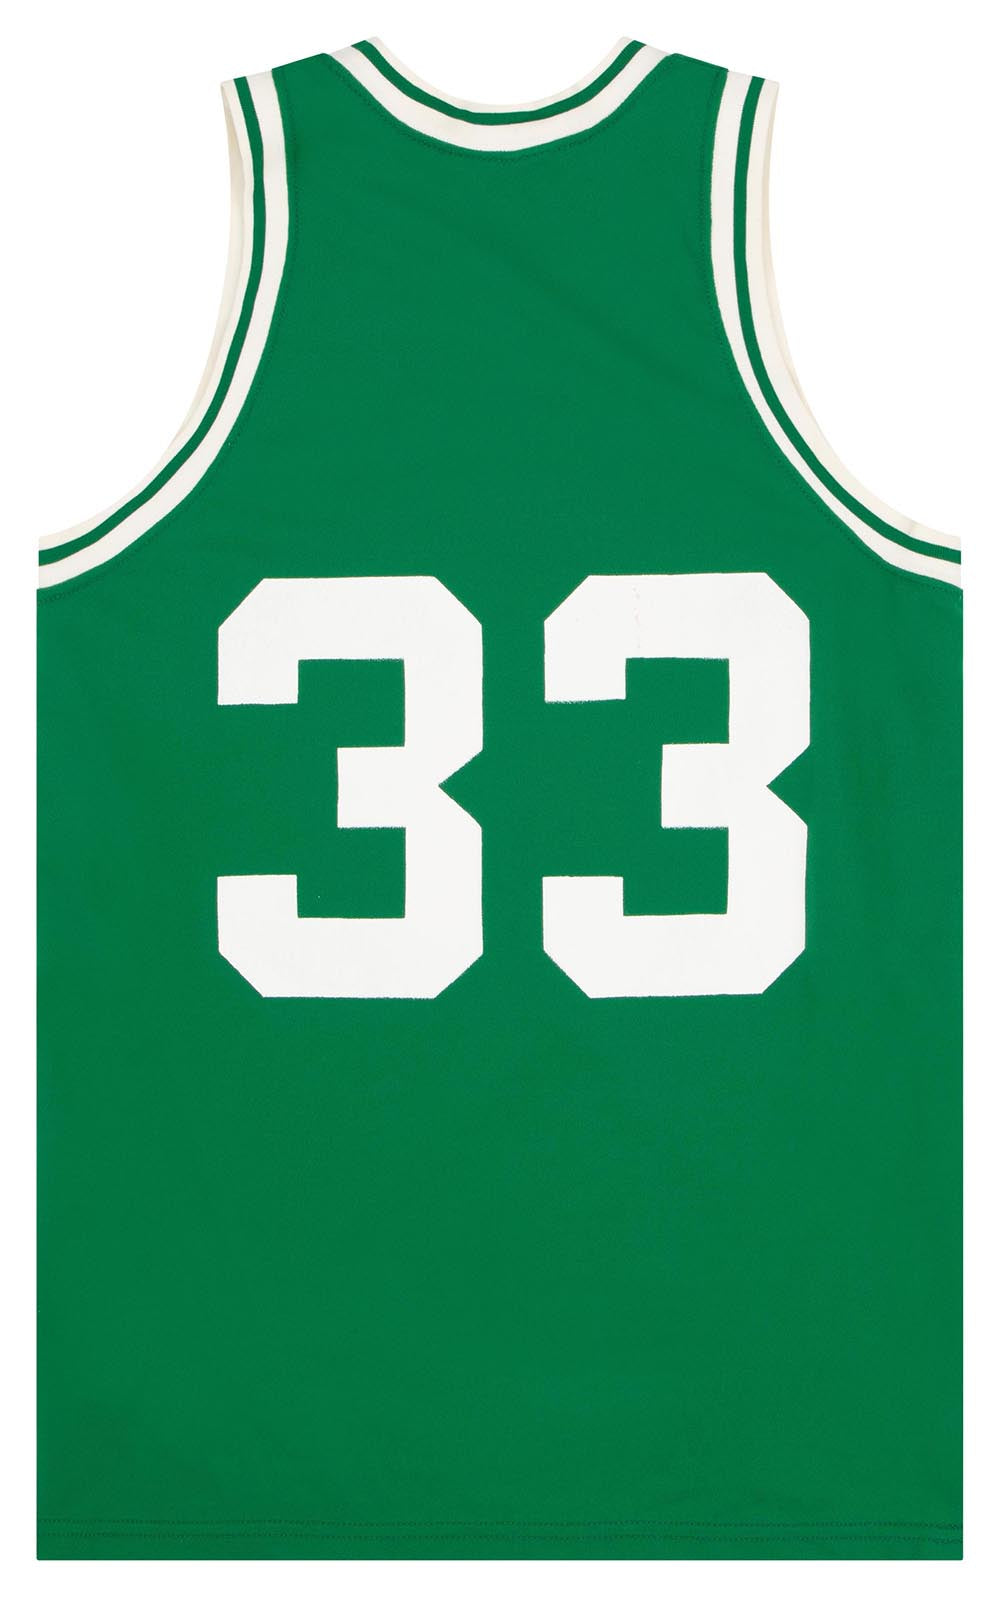 Vintage Boston Celtics Larry Bird Uniform 80s Jersey Shorts Sand Knit  MacGregor